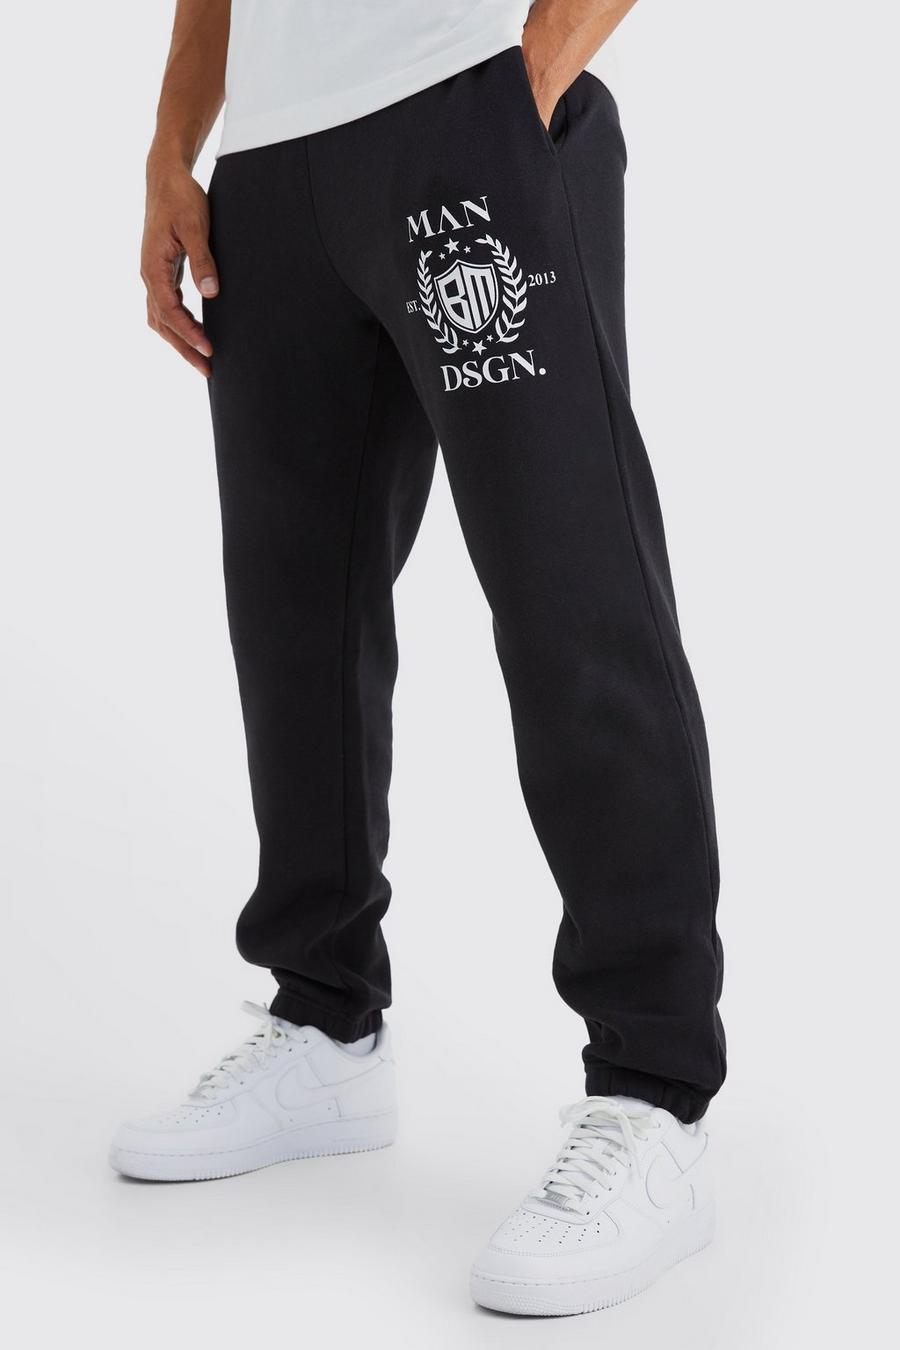 Pantaloni tuta stile Varsity Man con stampa di stemma, Black